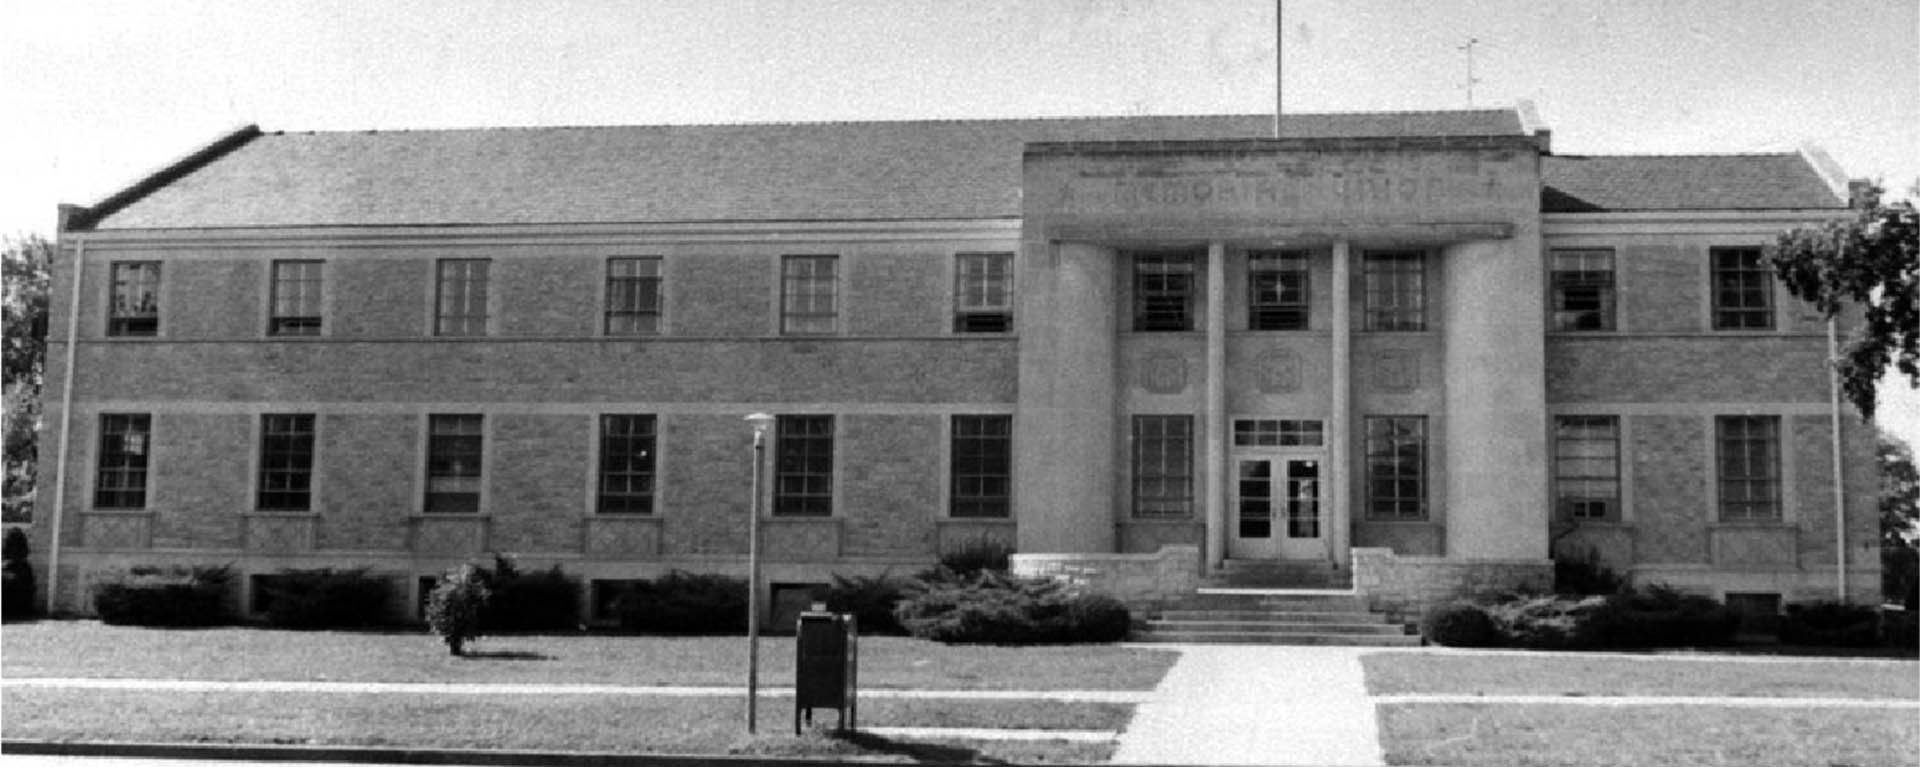 Memorial Union original building black and white 